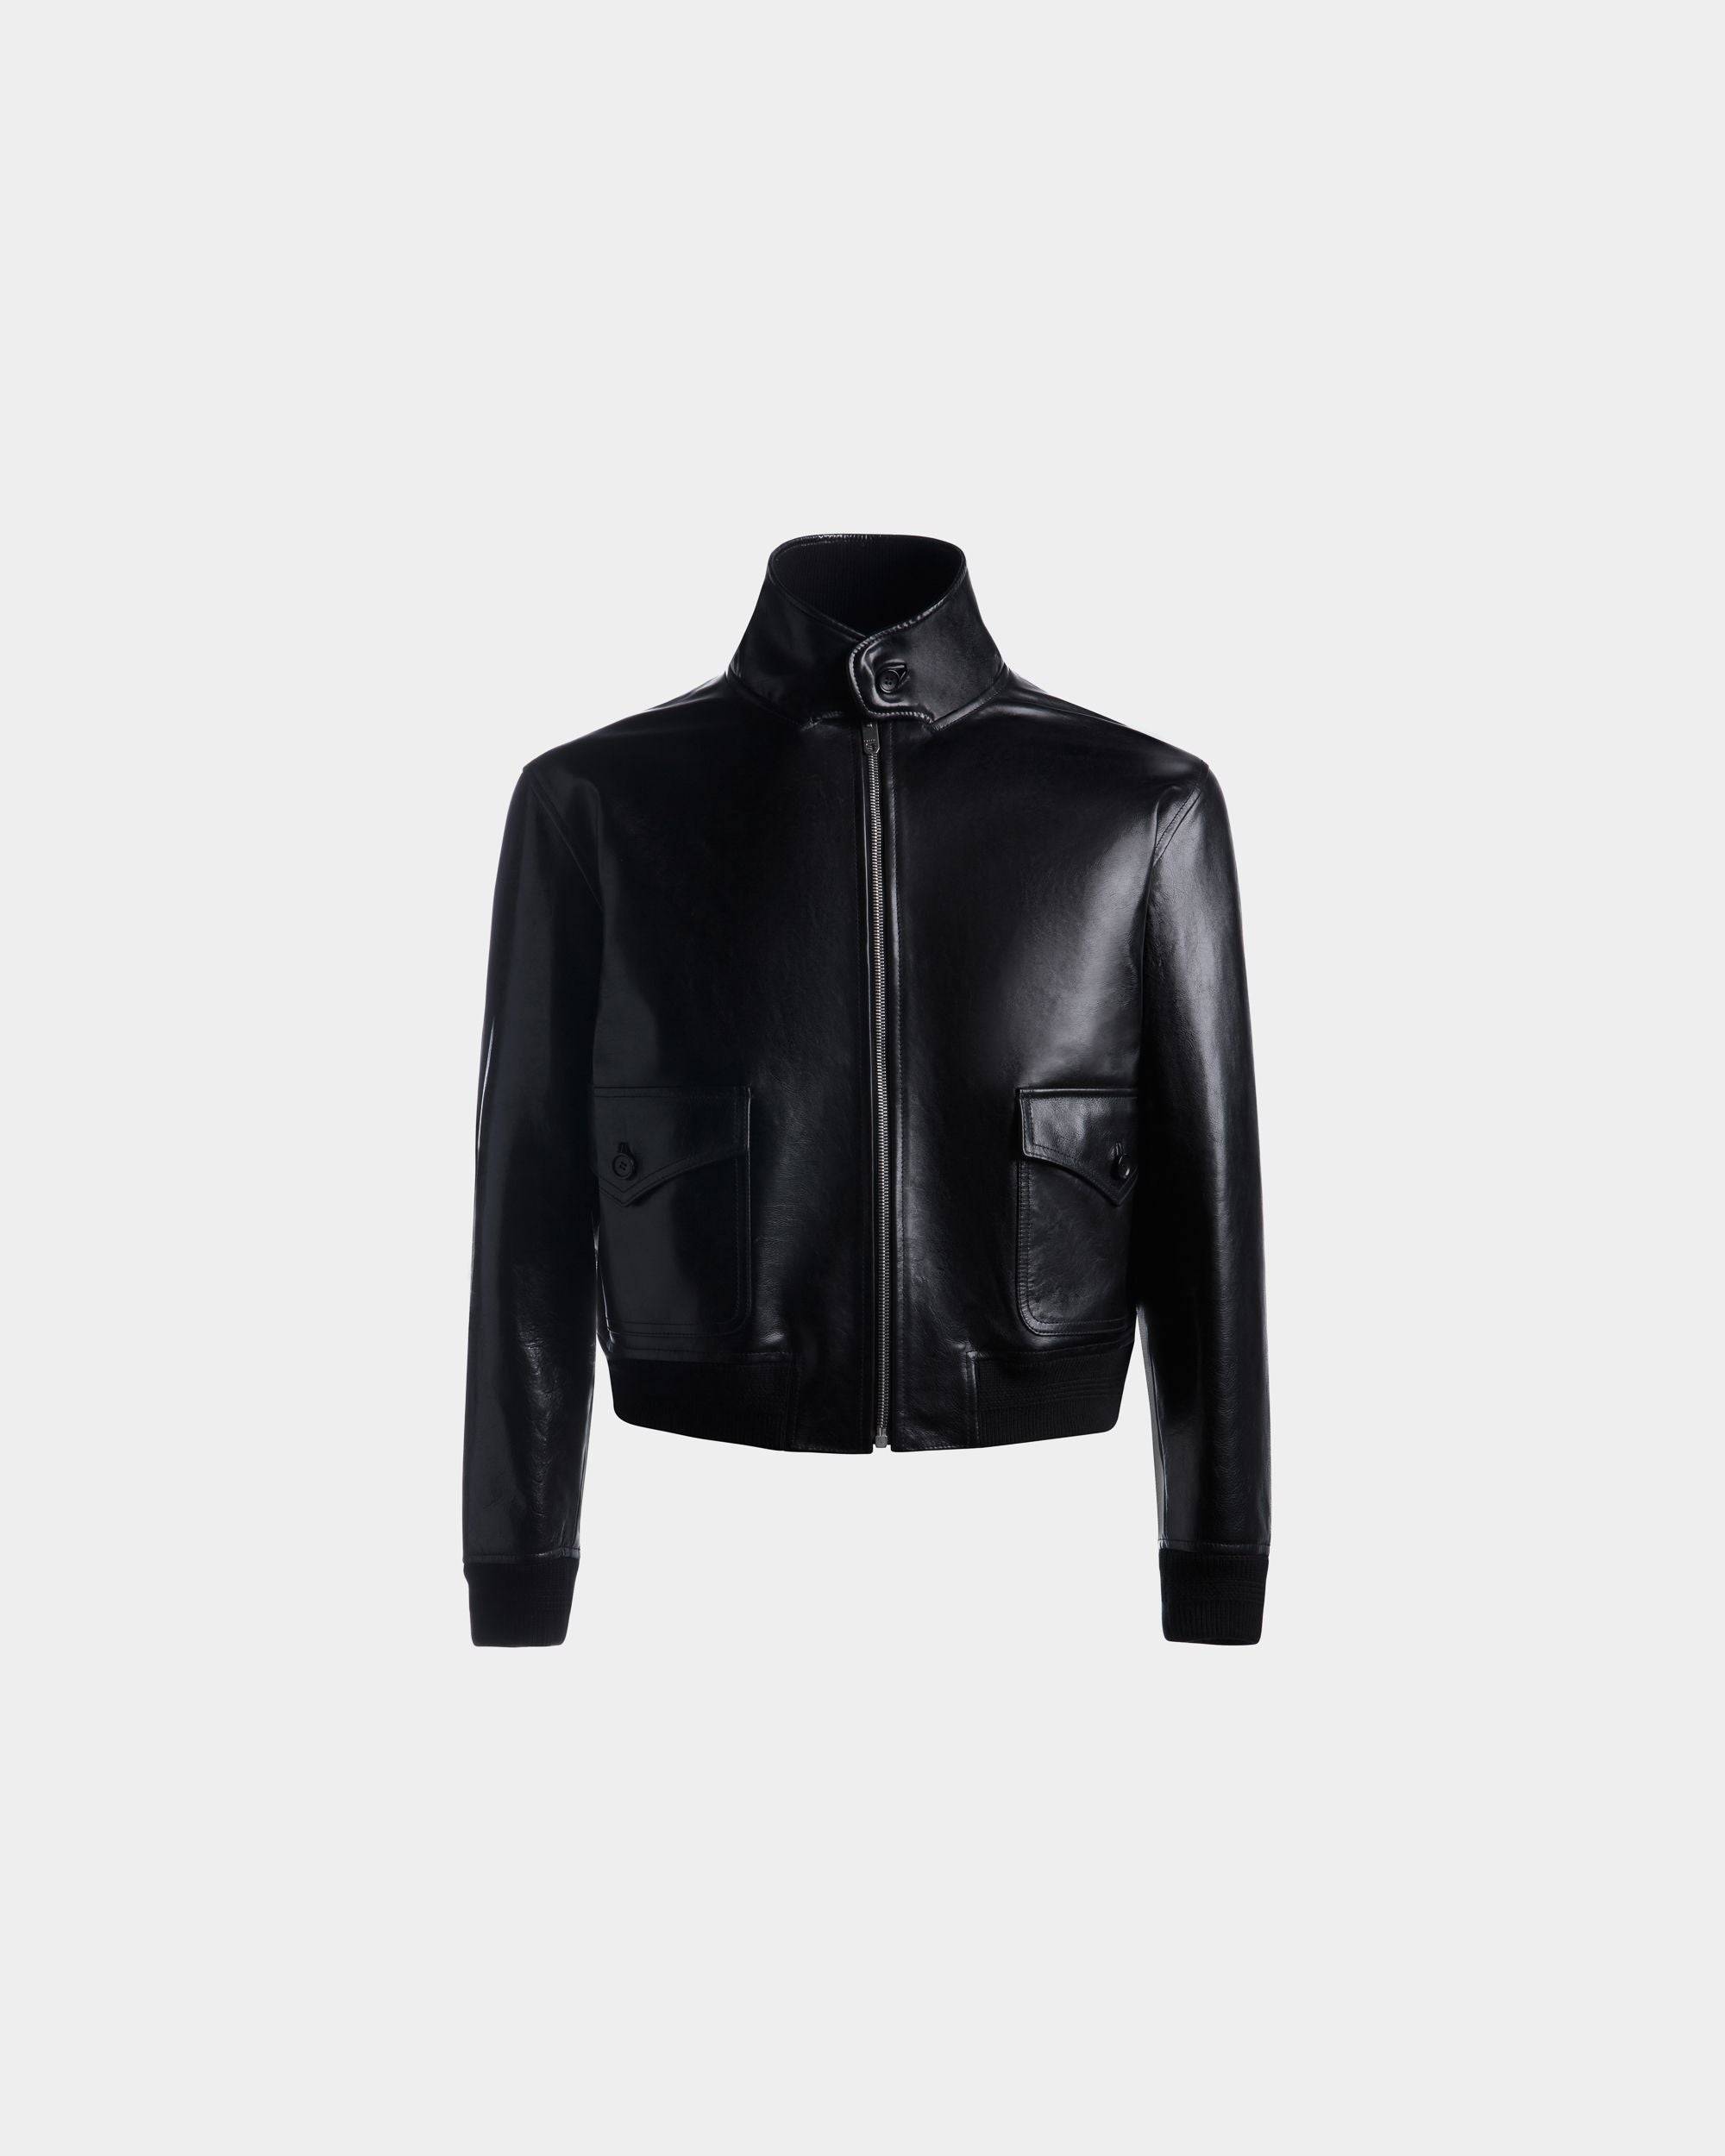 Men's Blouson in Black Leather | Bally | Still Life Front